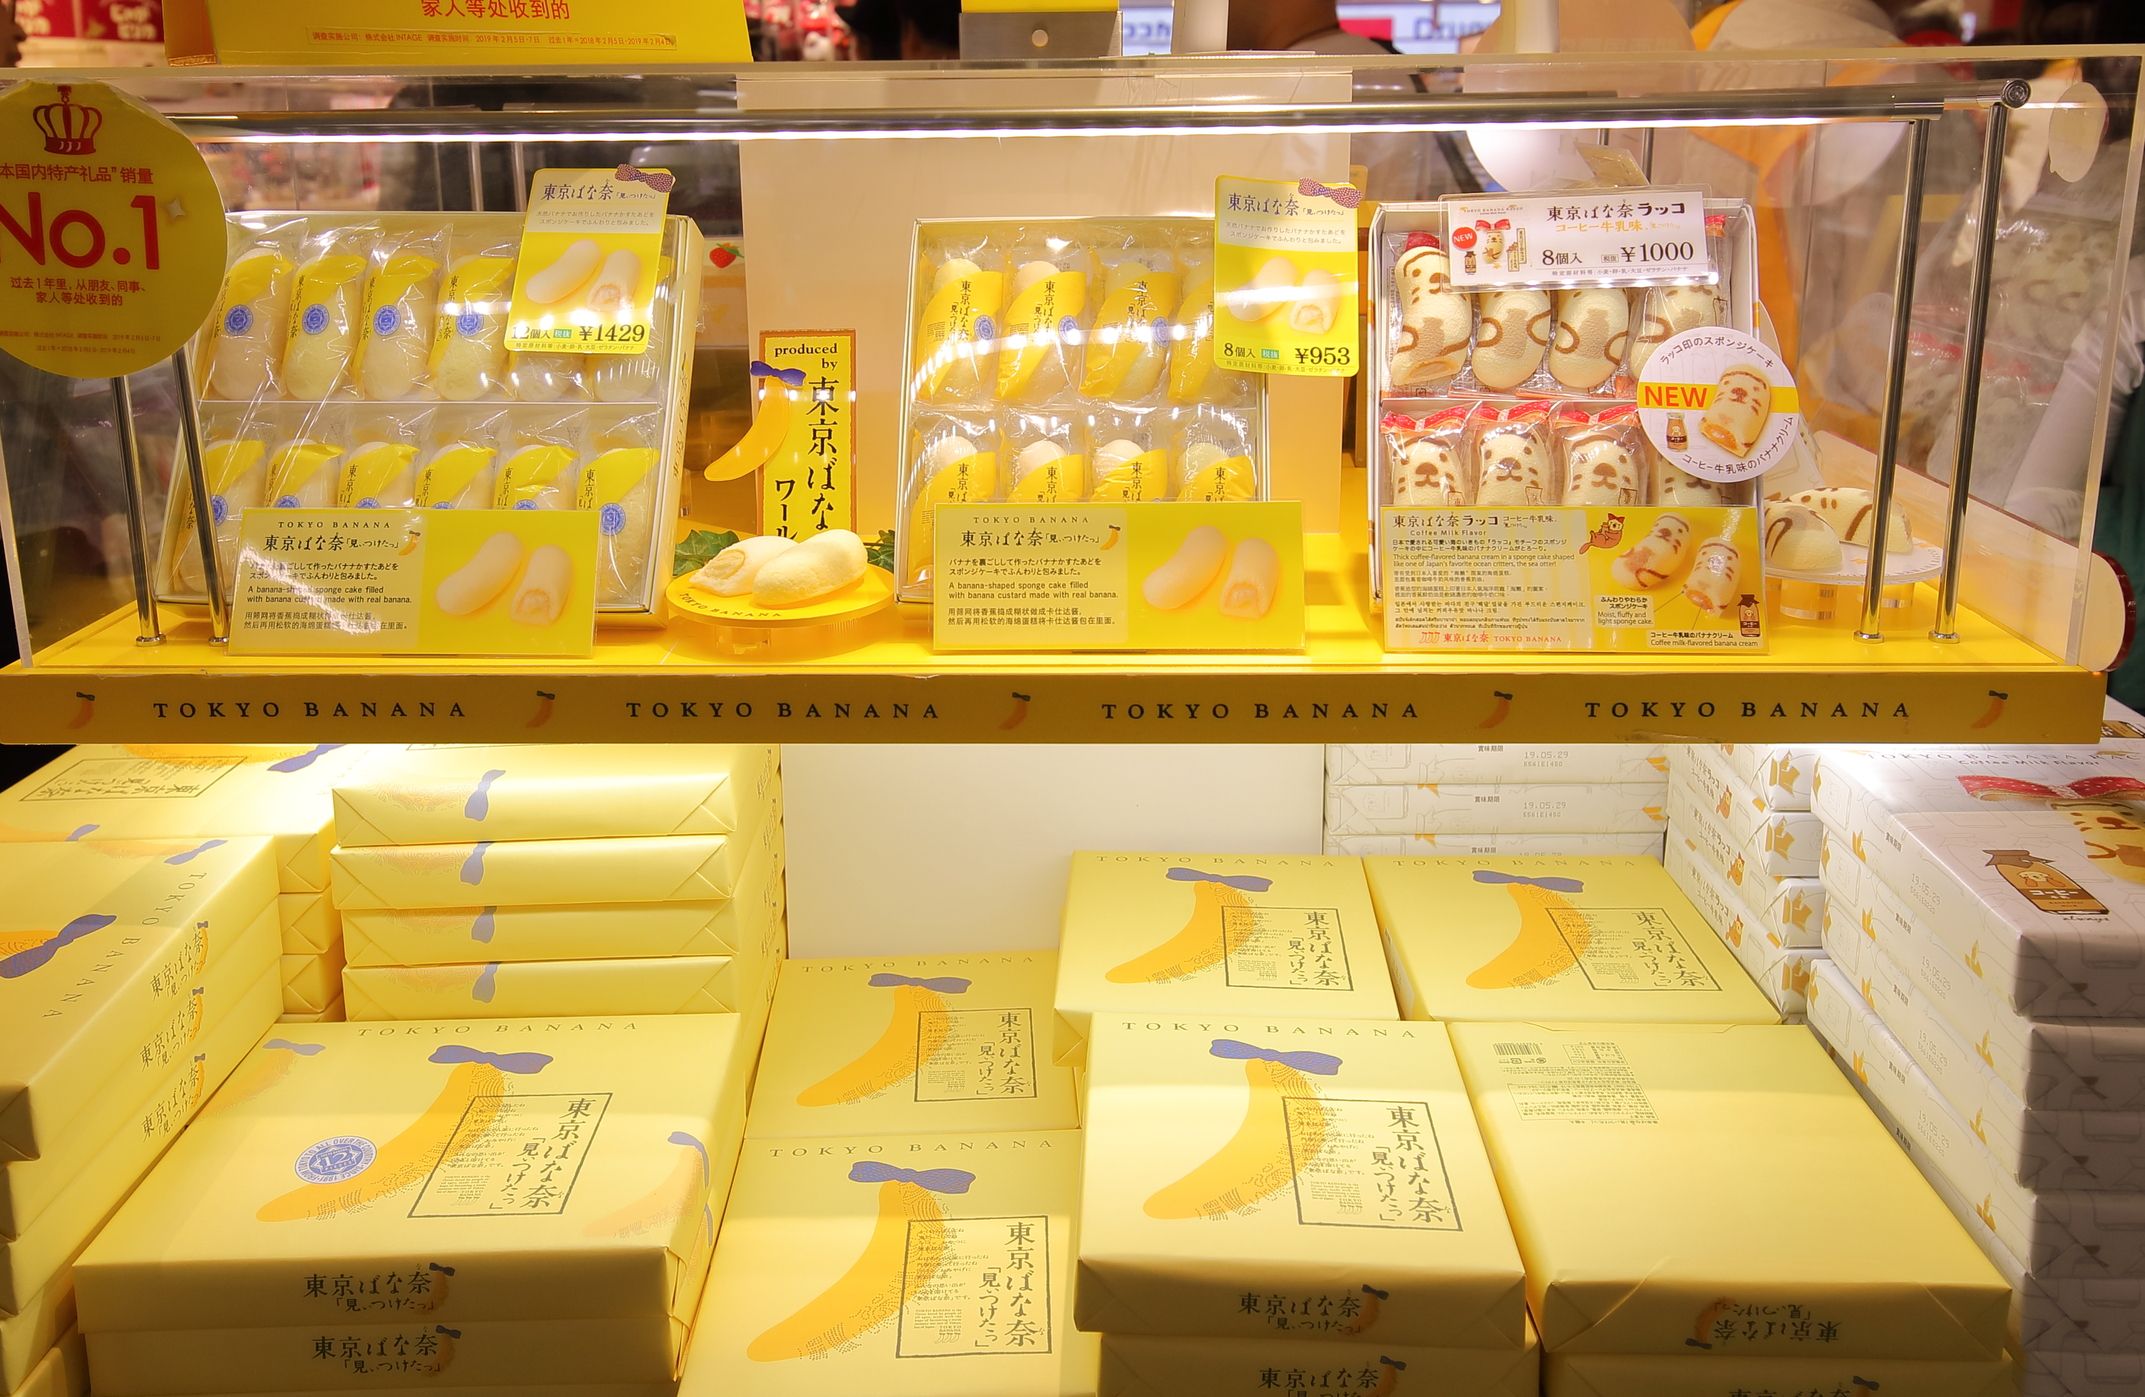 A supermarket shelf with Tokyo Bananas